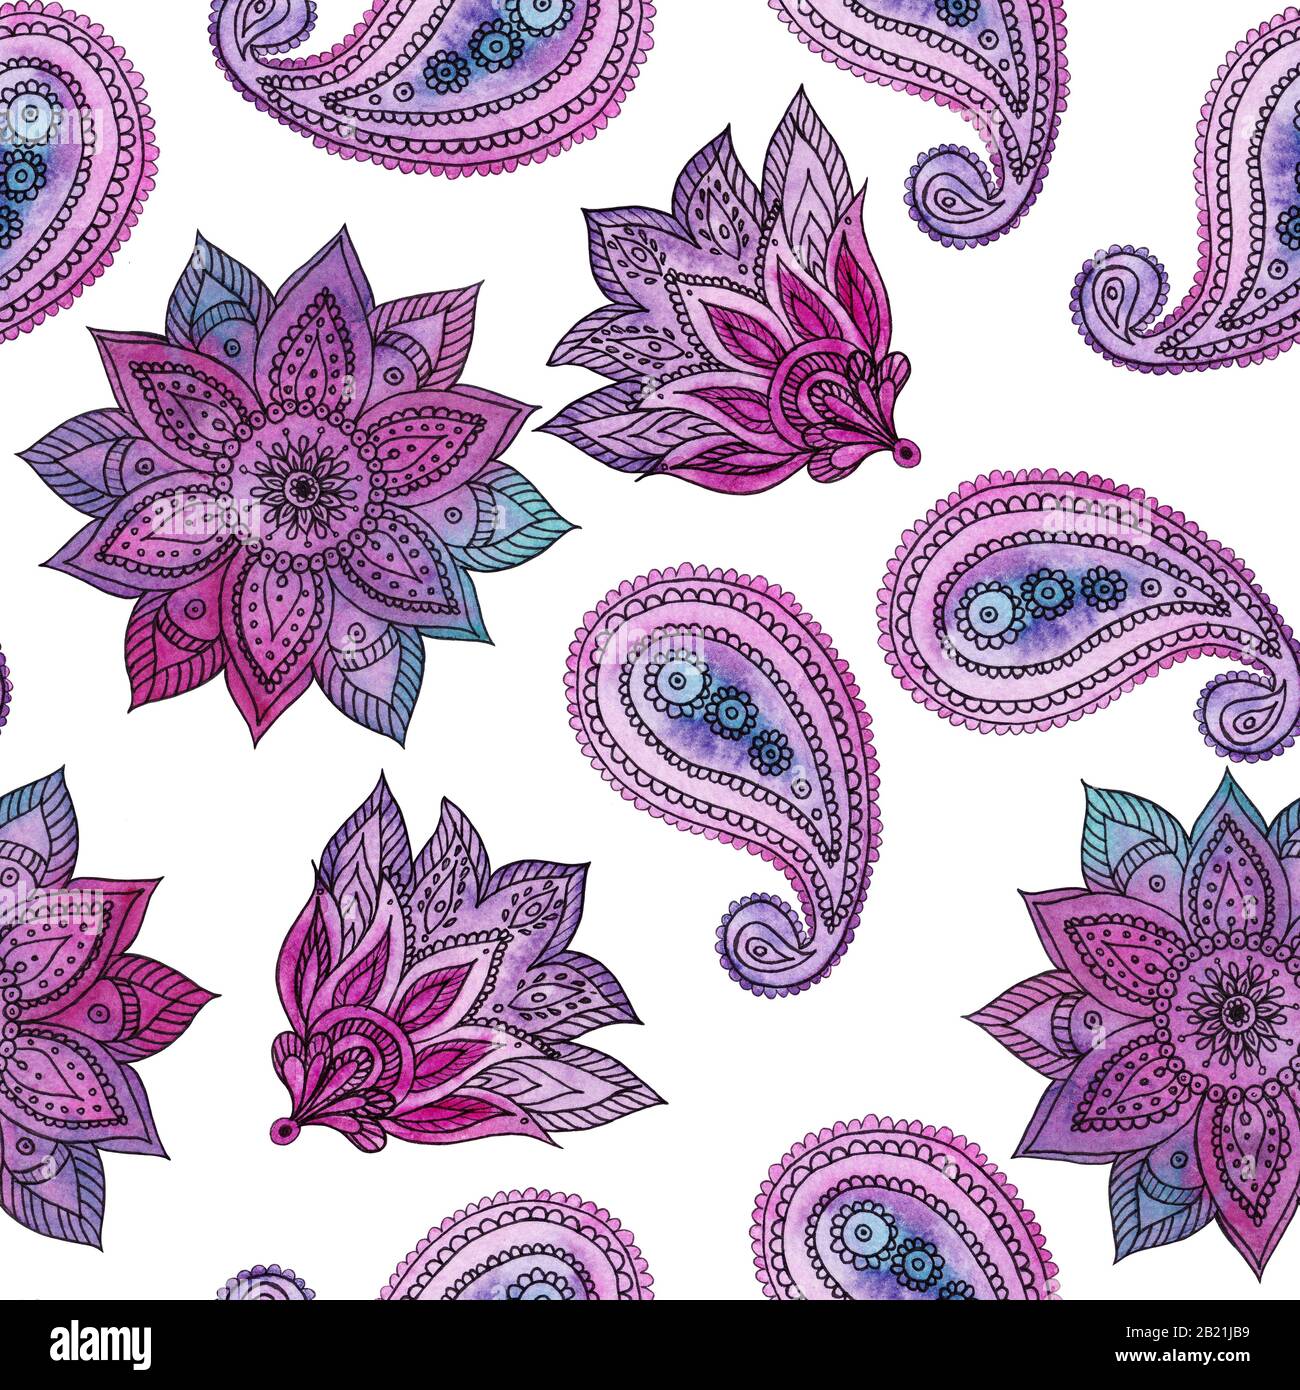 Seamless paisley style hand-drawn pattern. Watercolor elements. Stock Photo